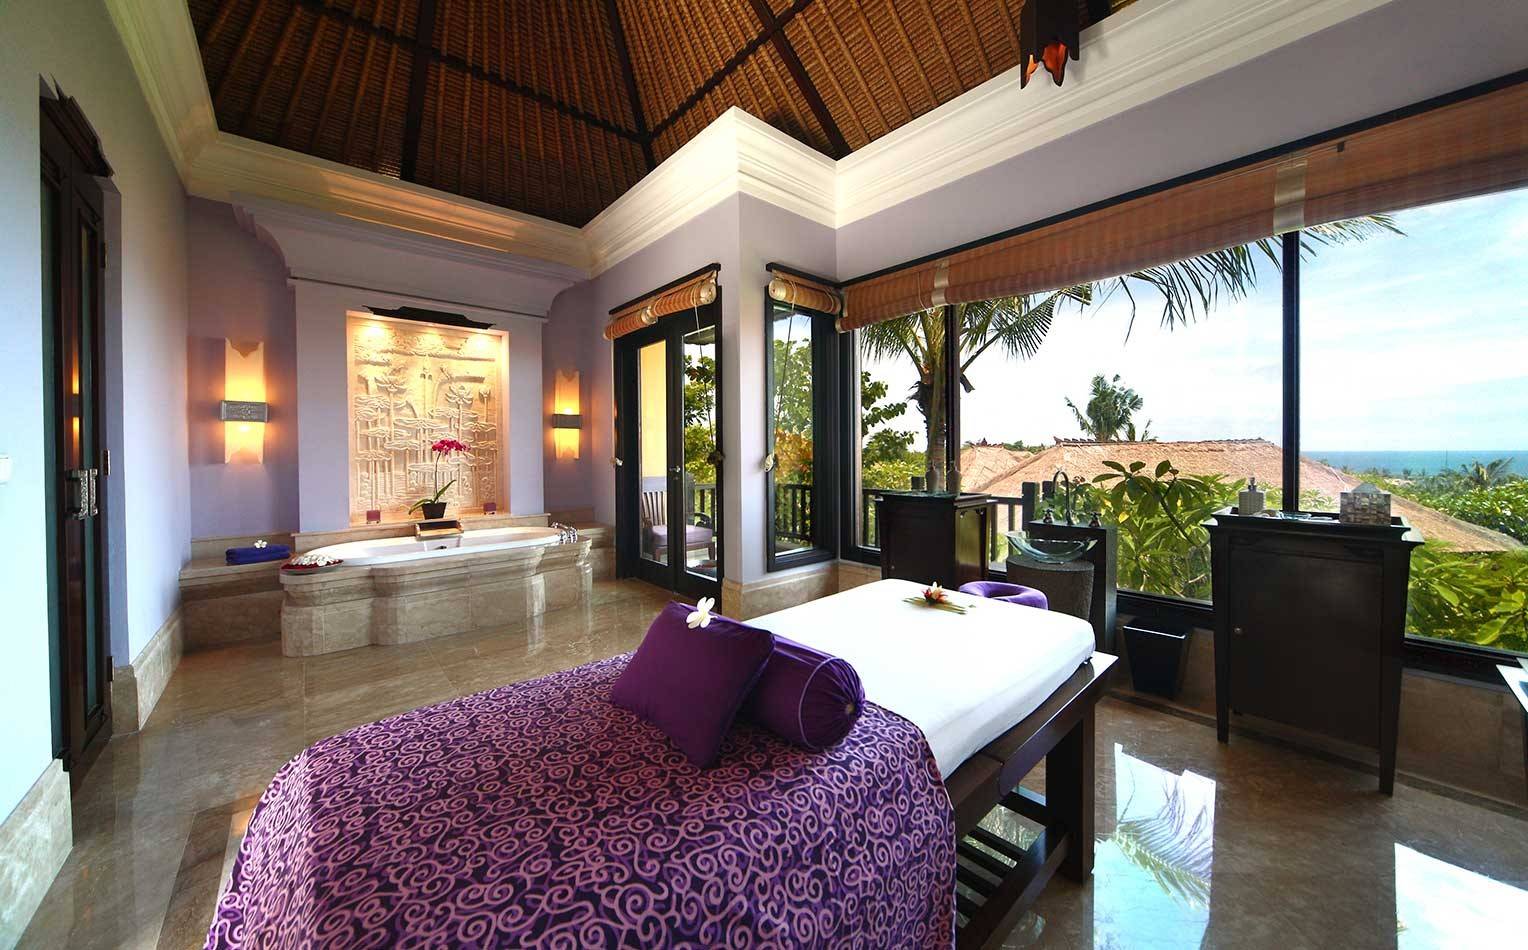 Bali tropic resort & spa 4* - индонезия, бали - отели | пегас туристик